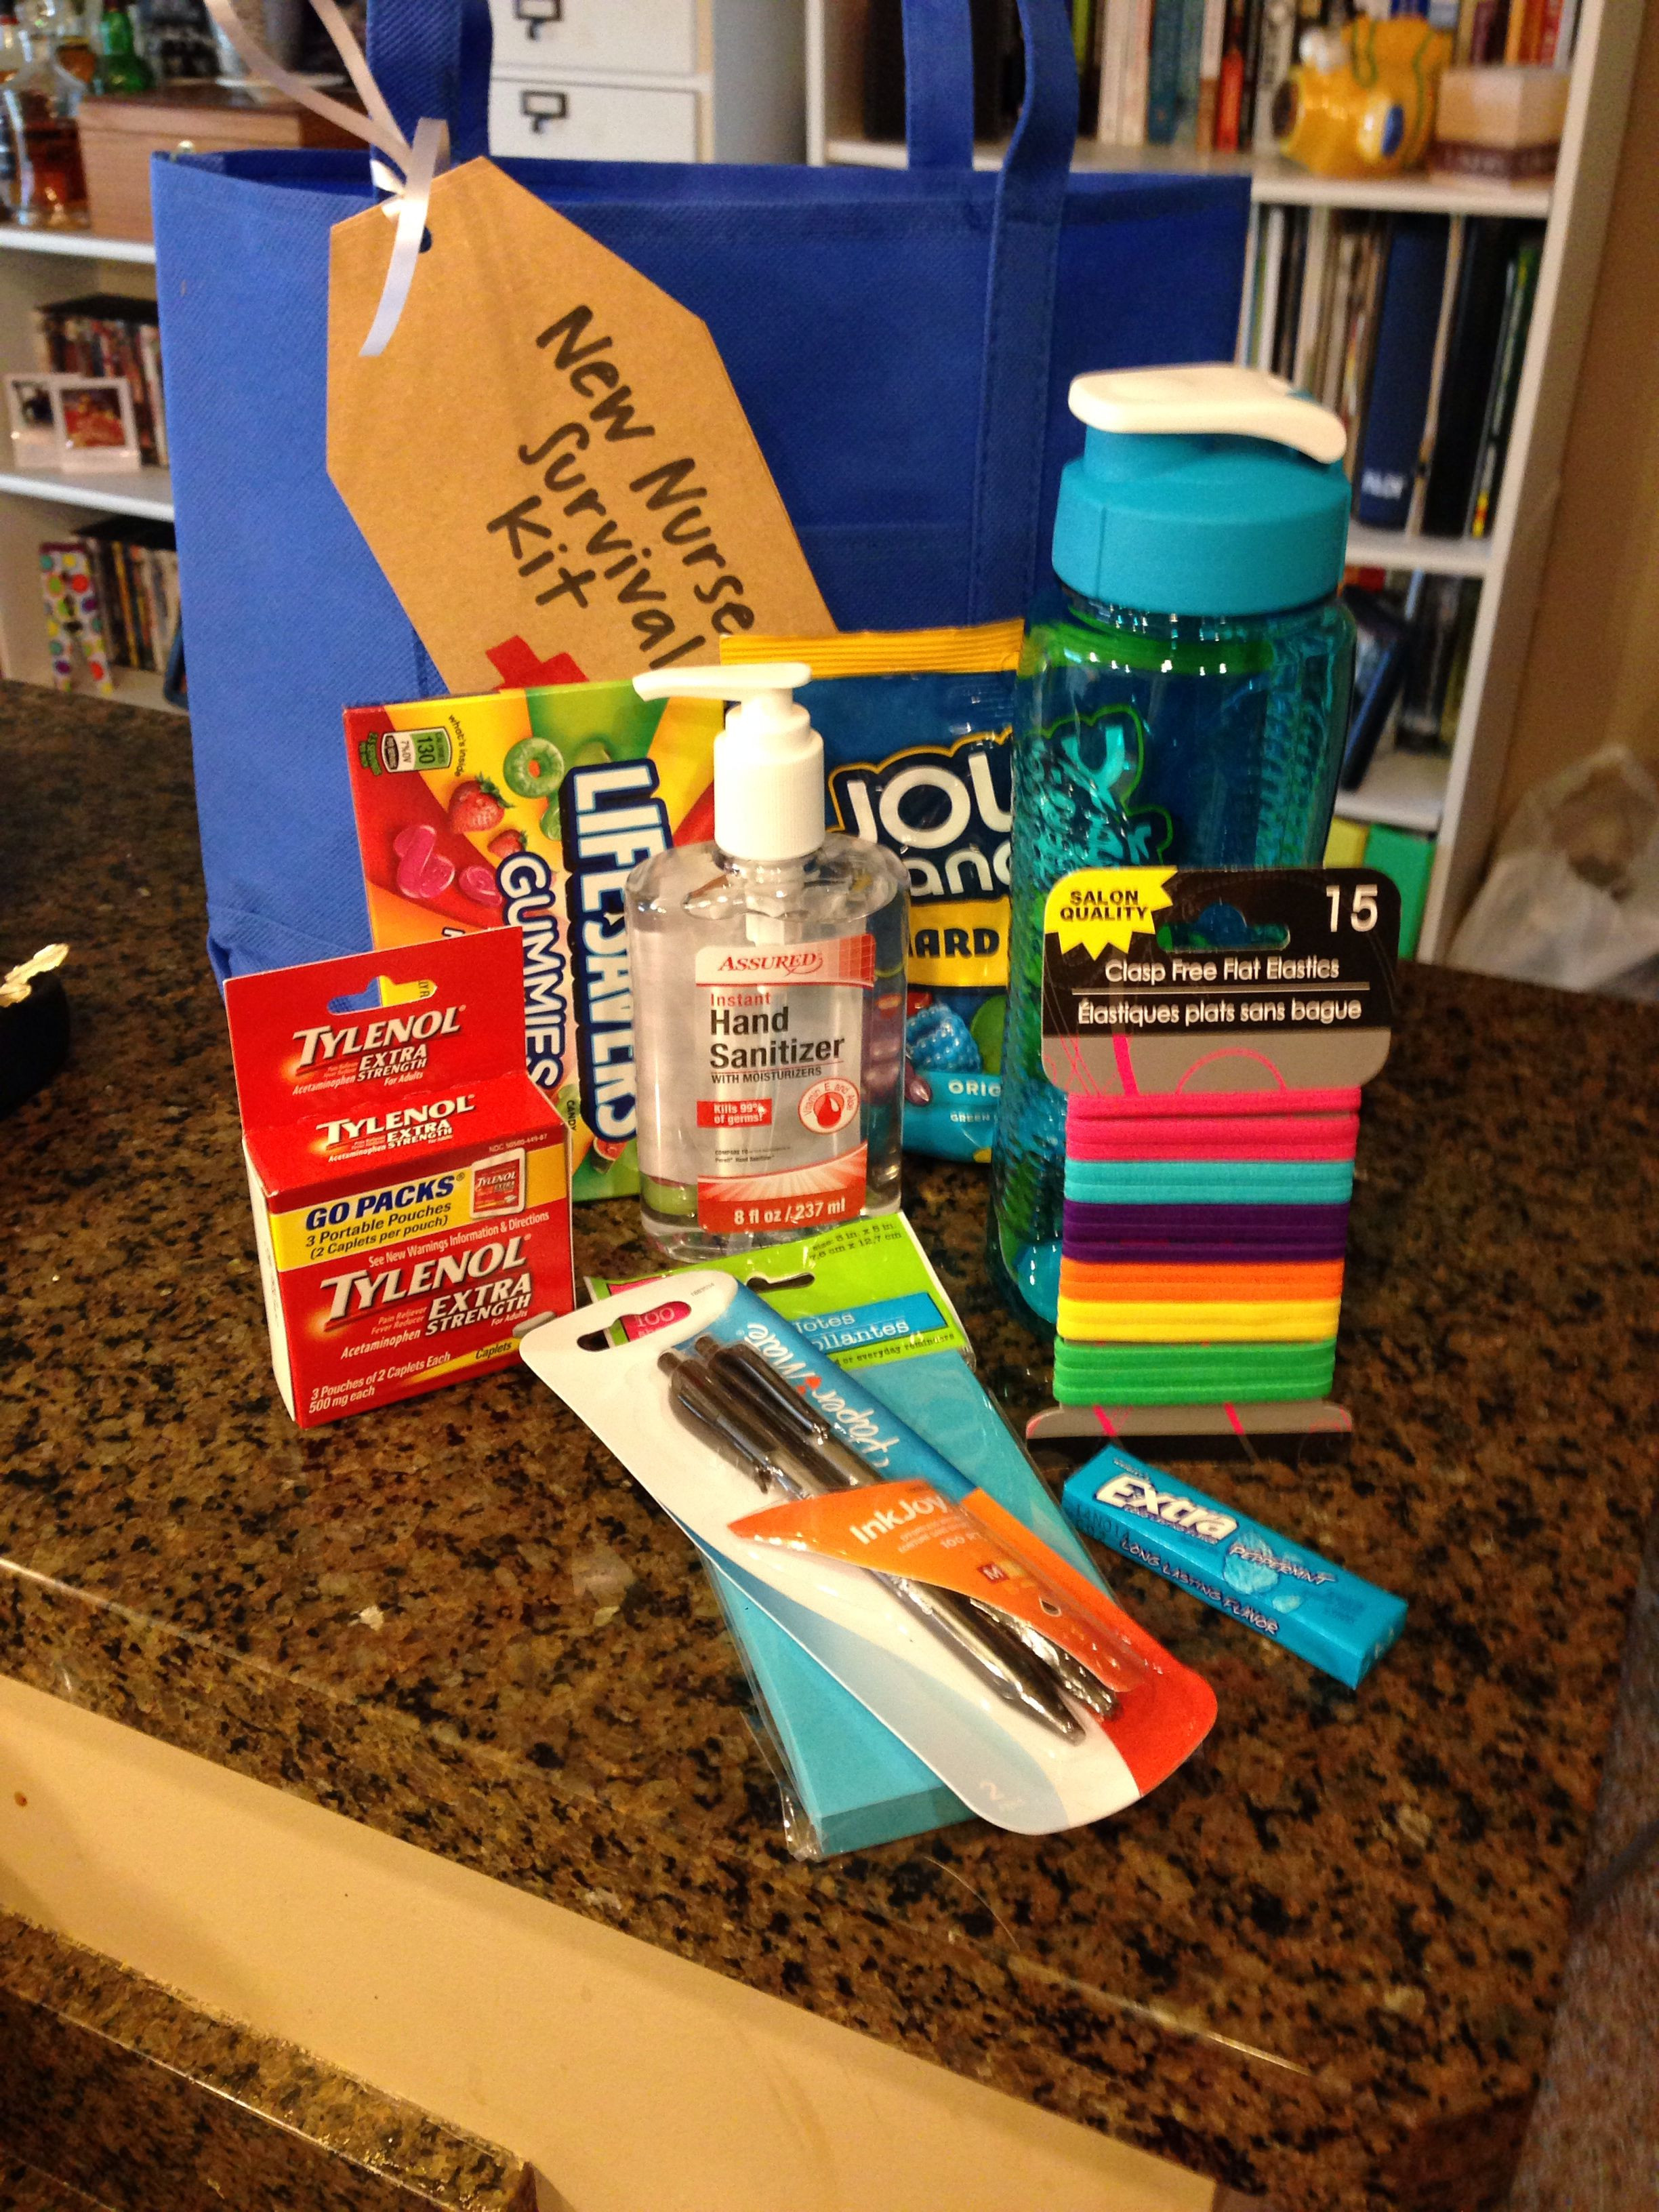 Best ideas about Nurse Gift Basket Ideas
. Save or Pin New Nurse Survival Kit prep Now.